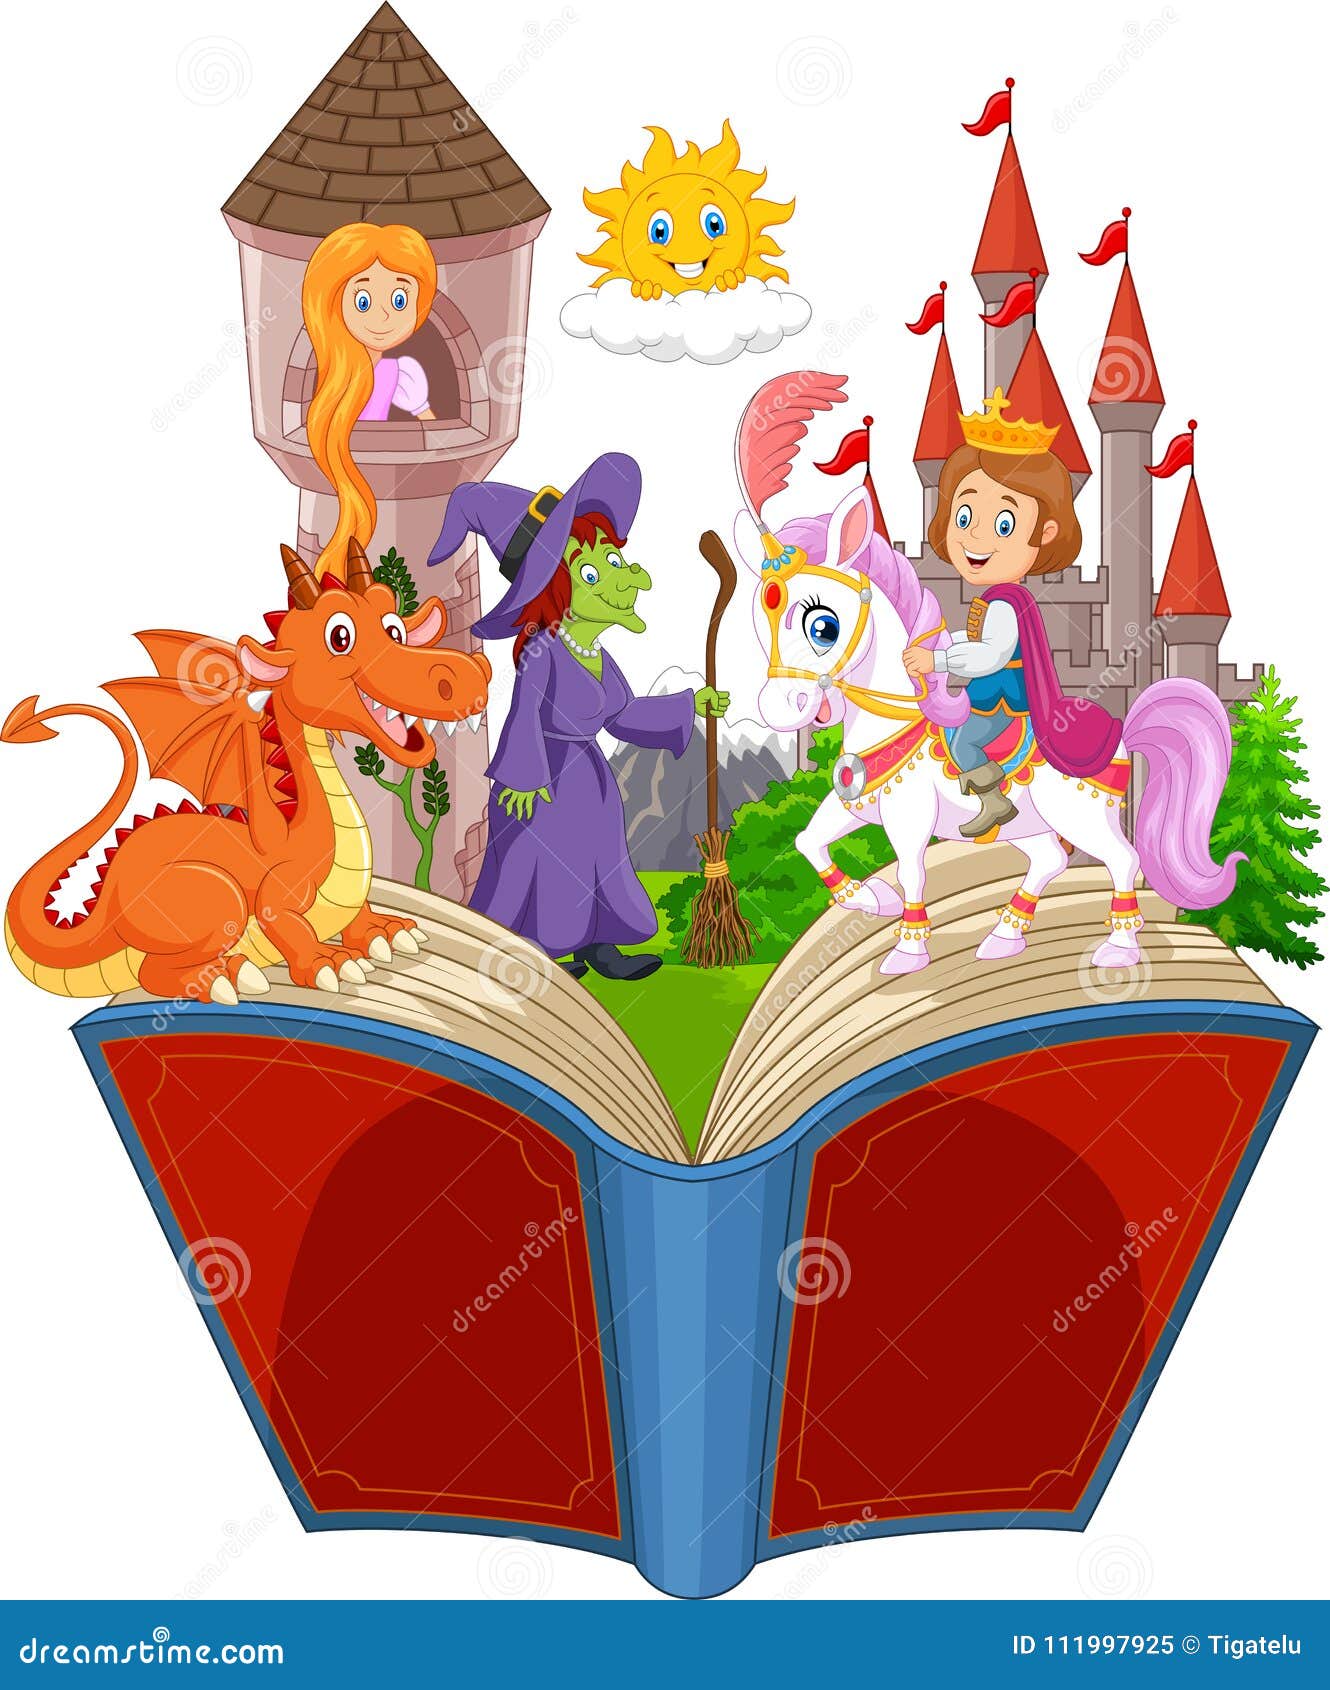 imagination in a children fairy tail fantasy book